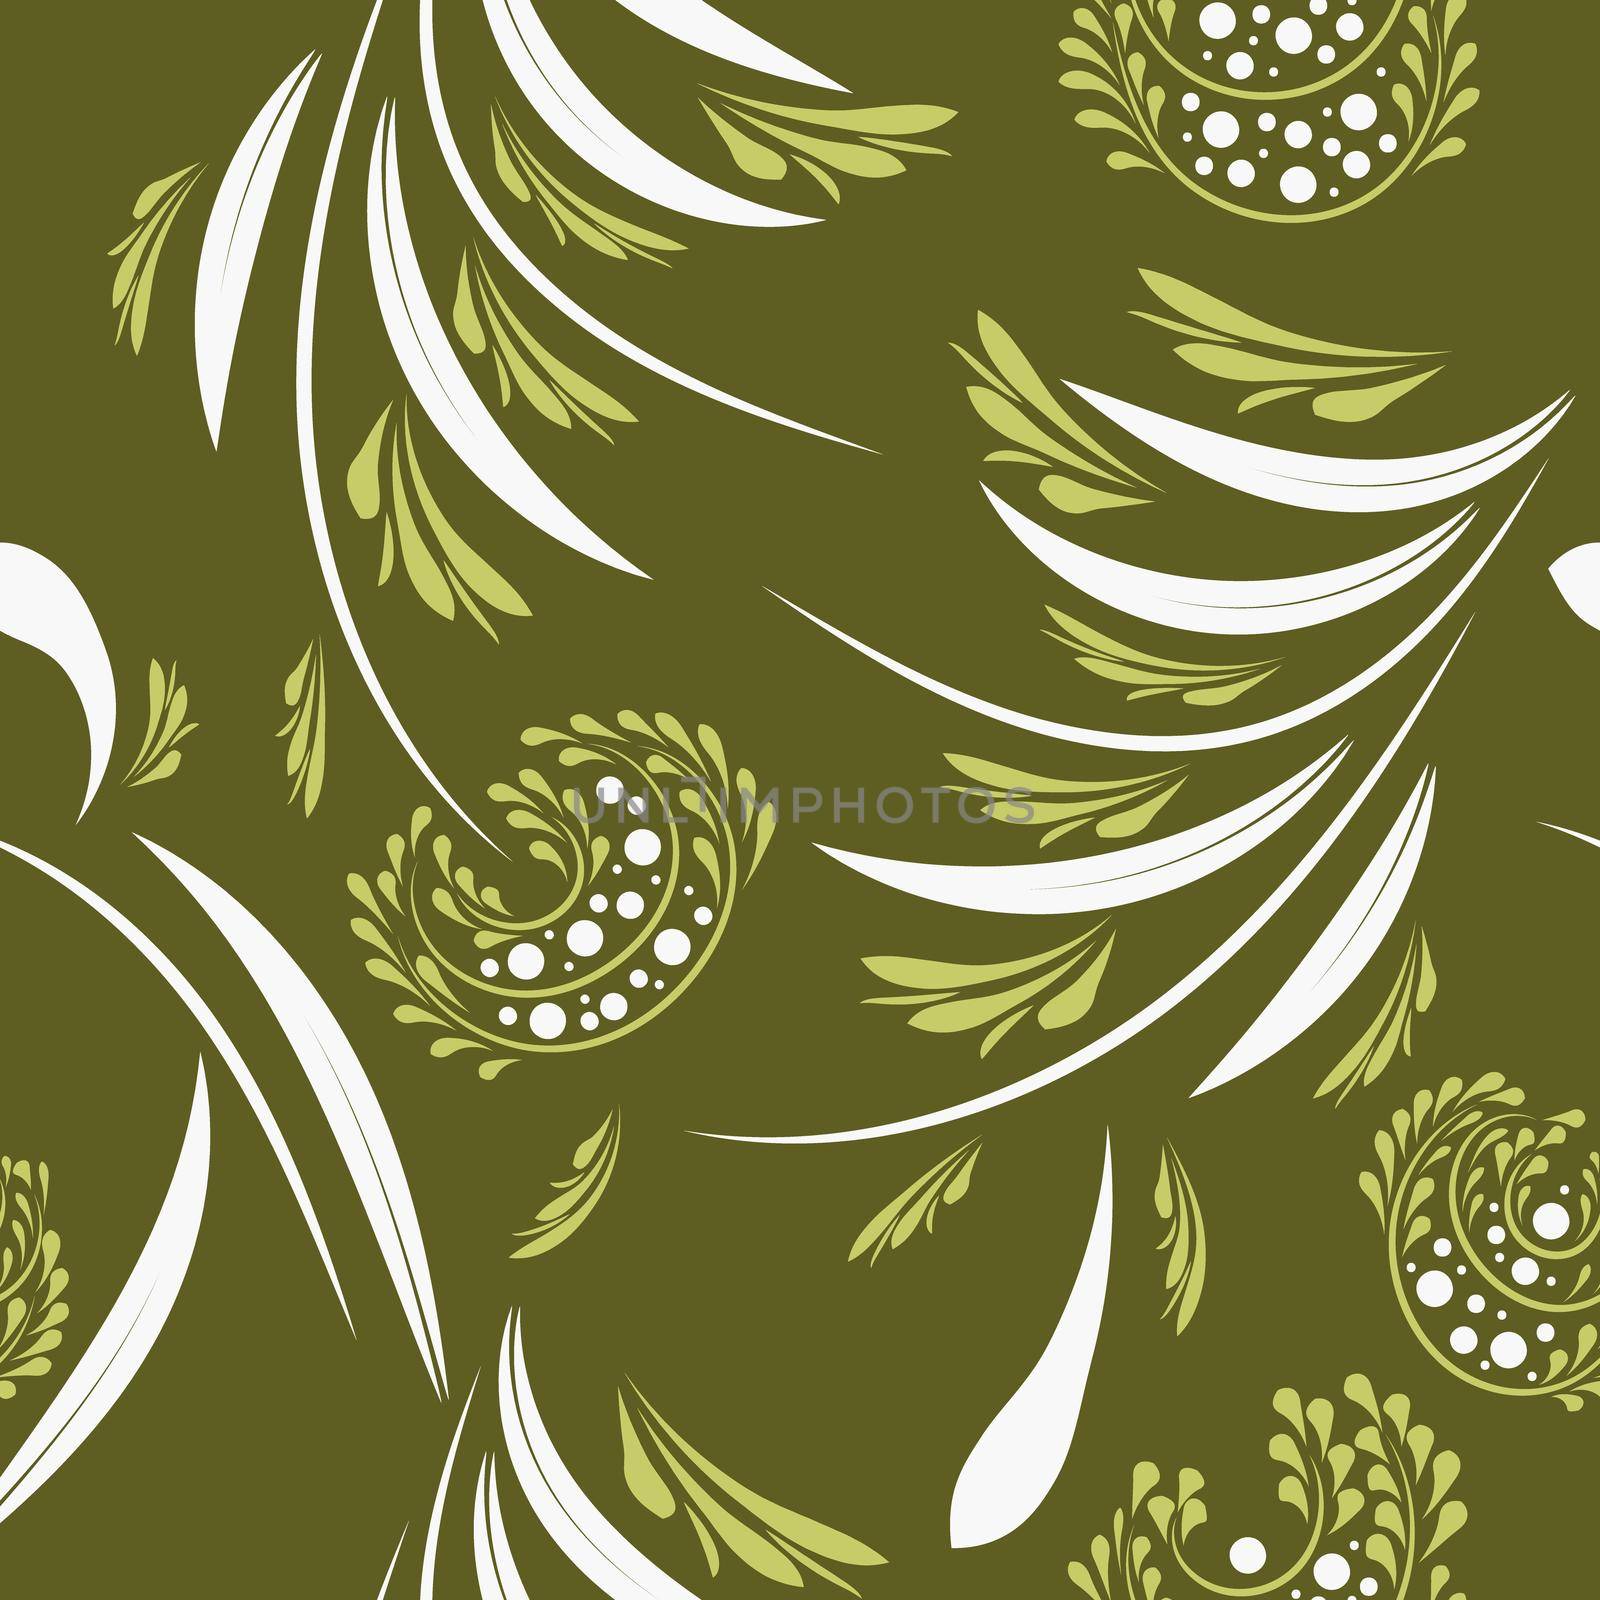 Folk flowers pattern Floral surface design Seamless pattern by eskimos